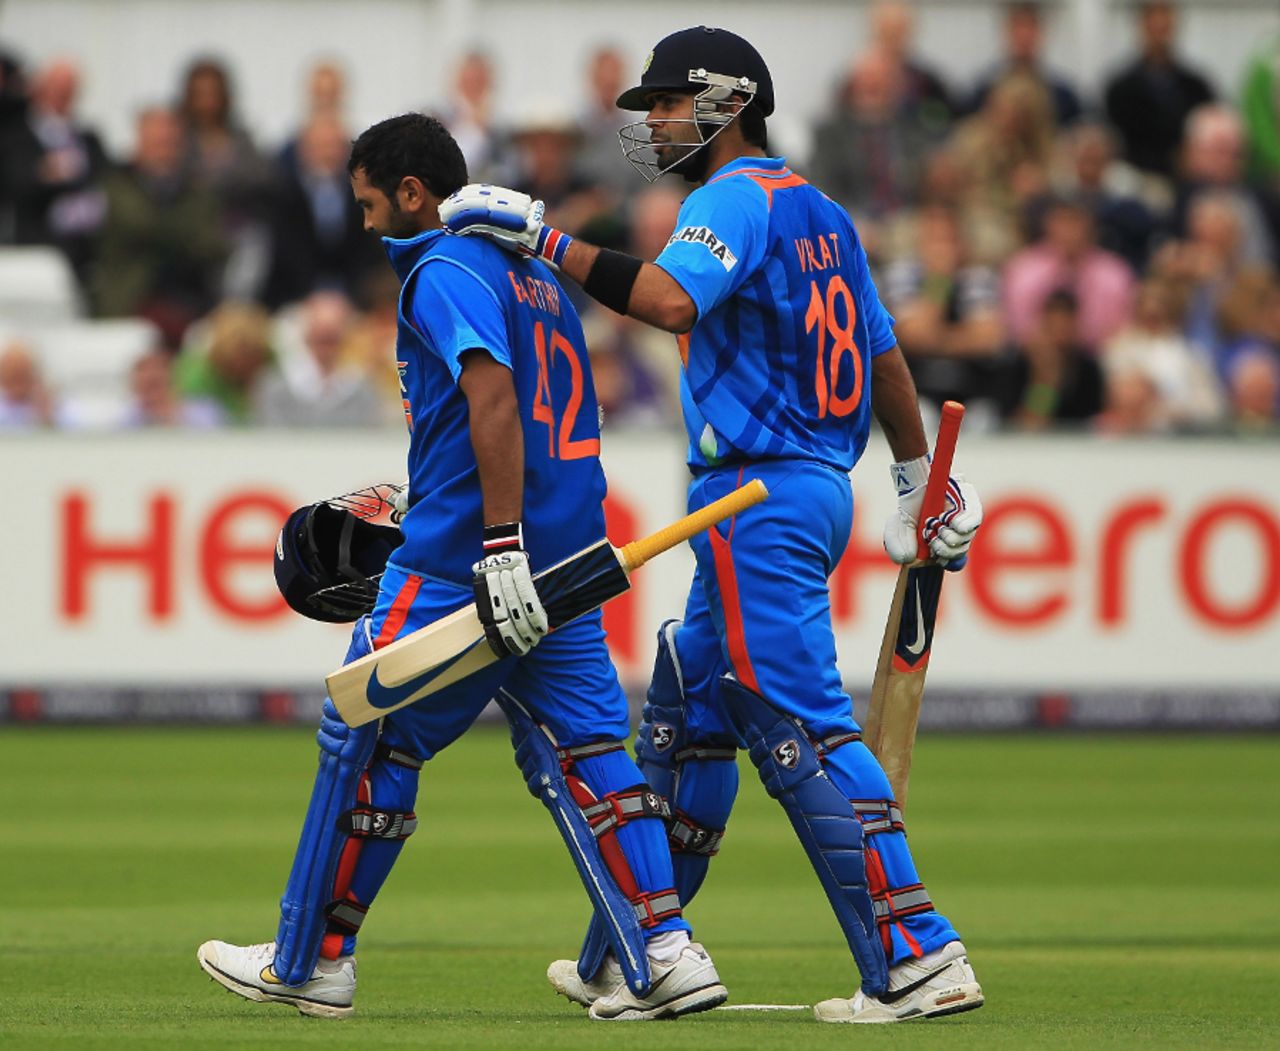 Parthiv Patel is comforted by Virat Kohli after falling for 95, England v India, 1st ODI, Chester-le-Street, September 3, 2011